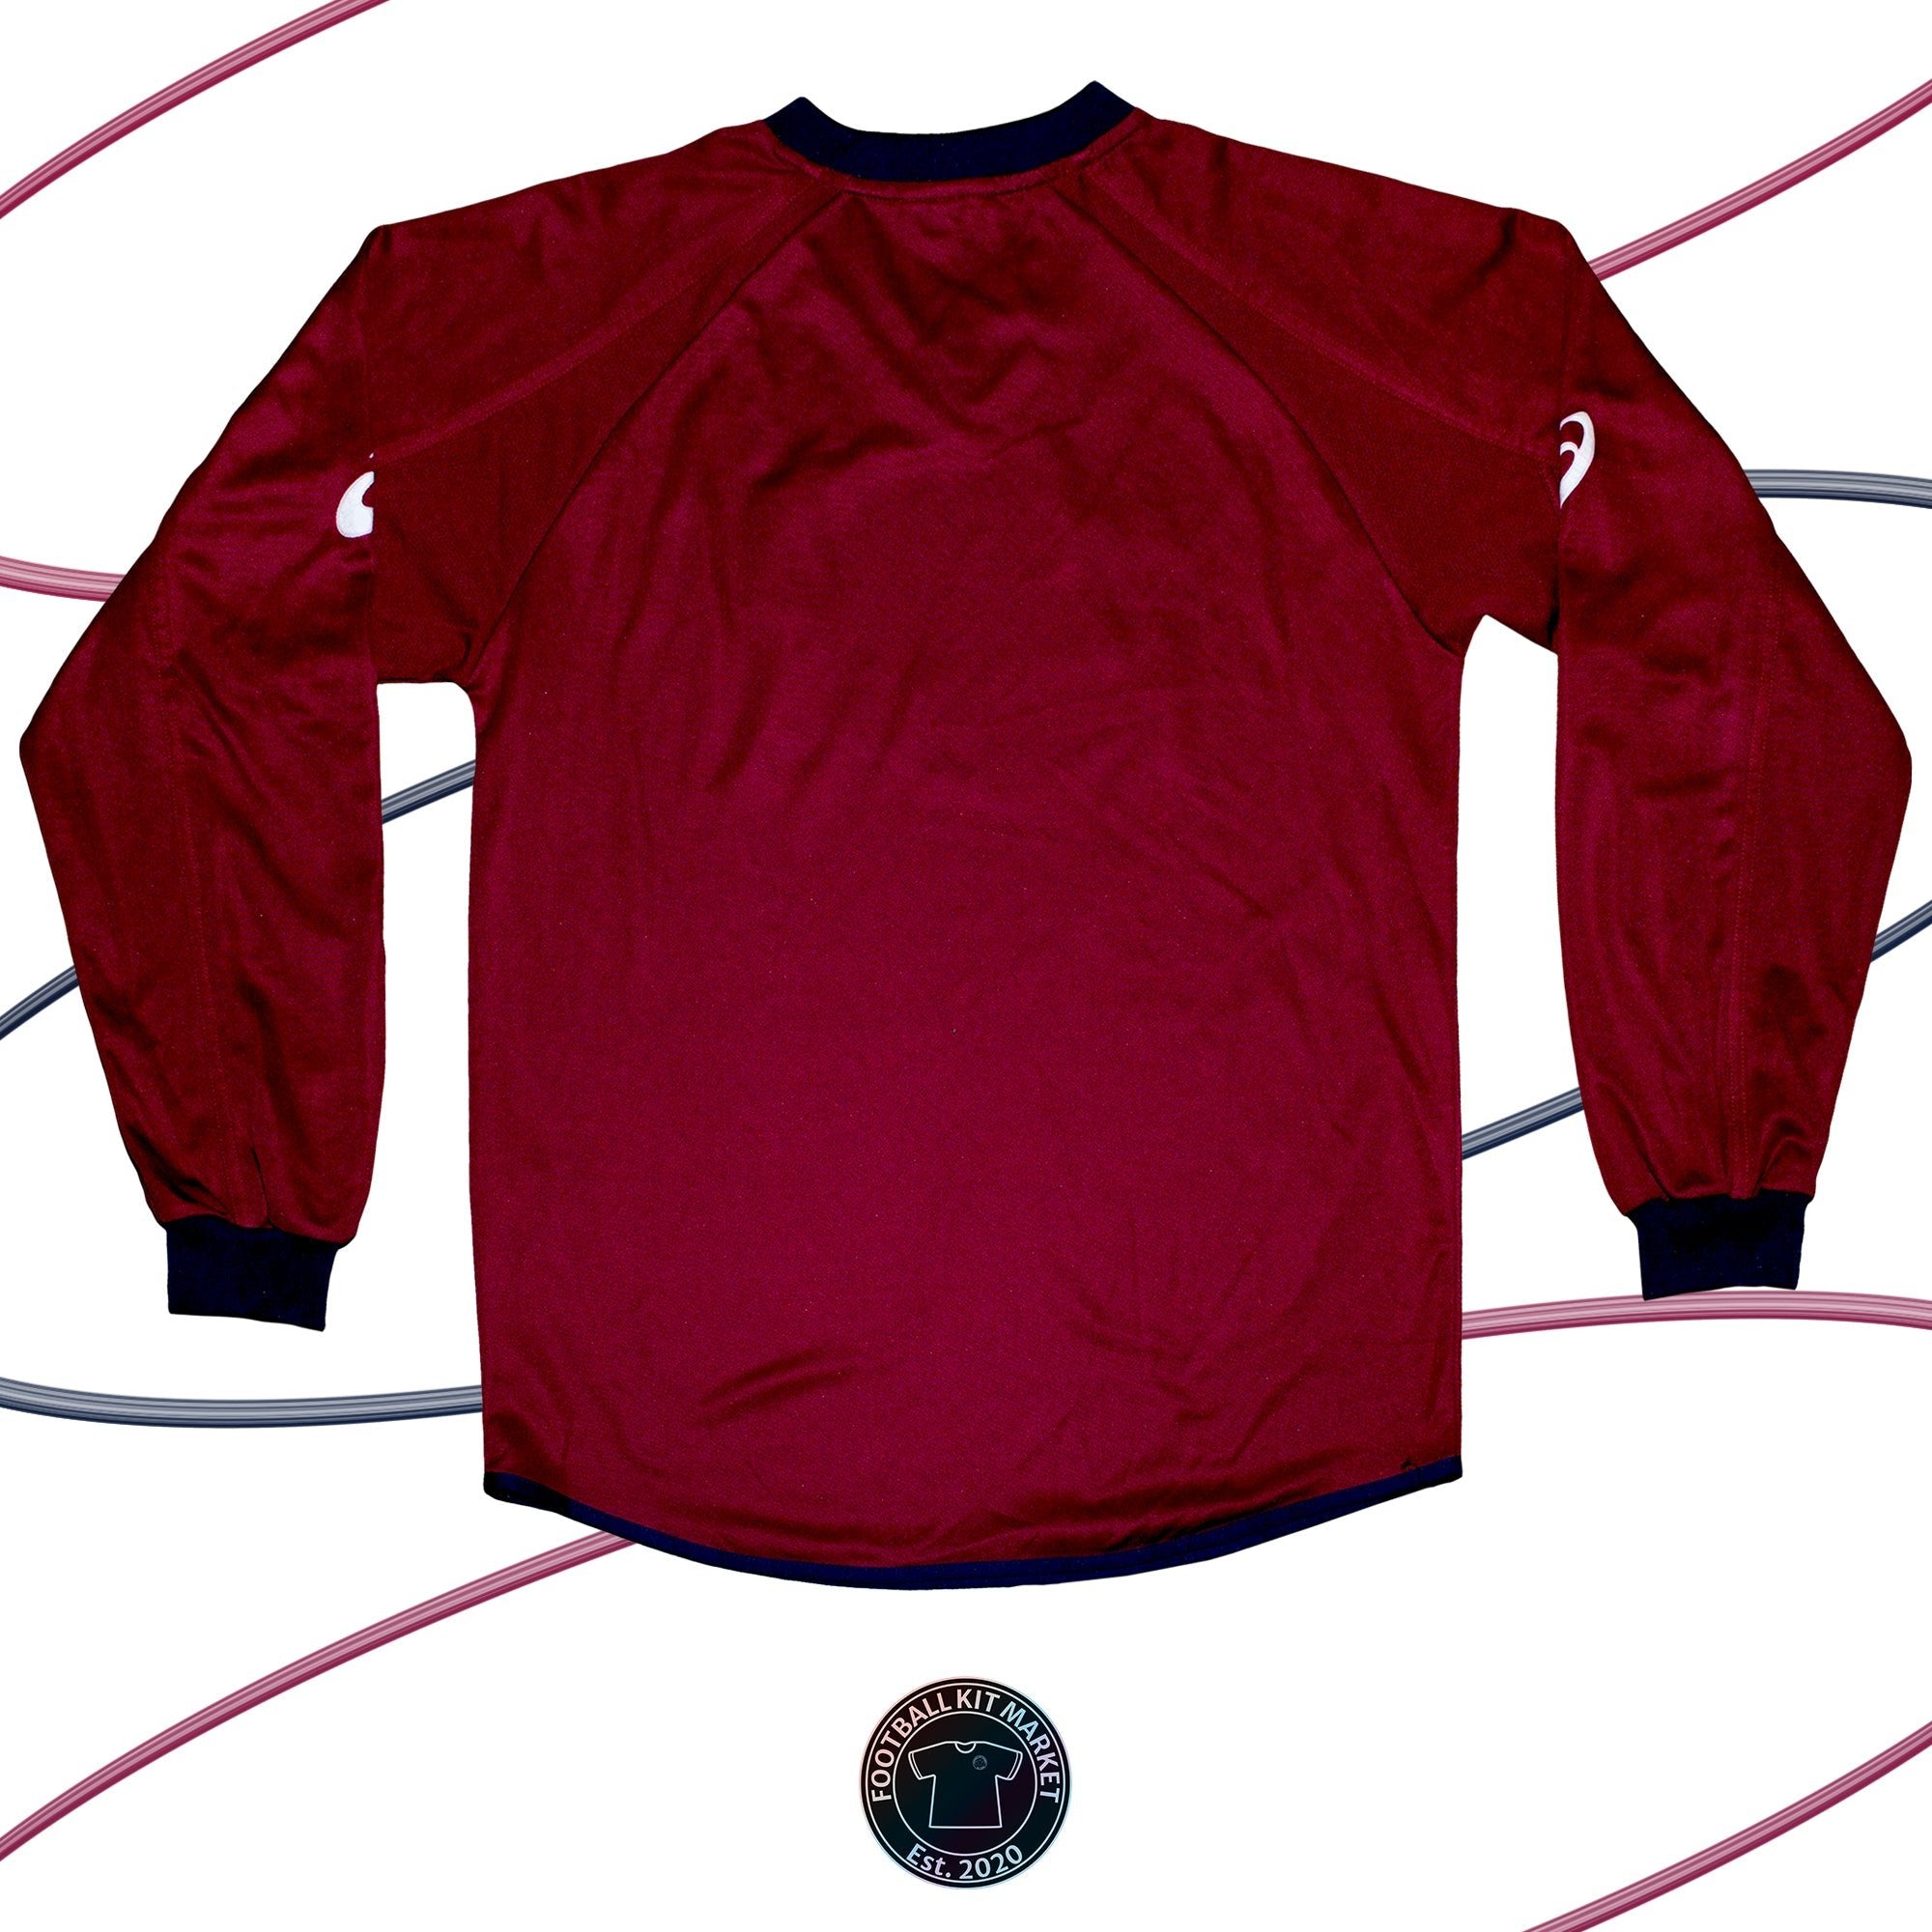 Genuine TORINO Training (2004-2005) - ASICS (M) - Product Image from Football Kit Market